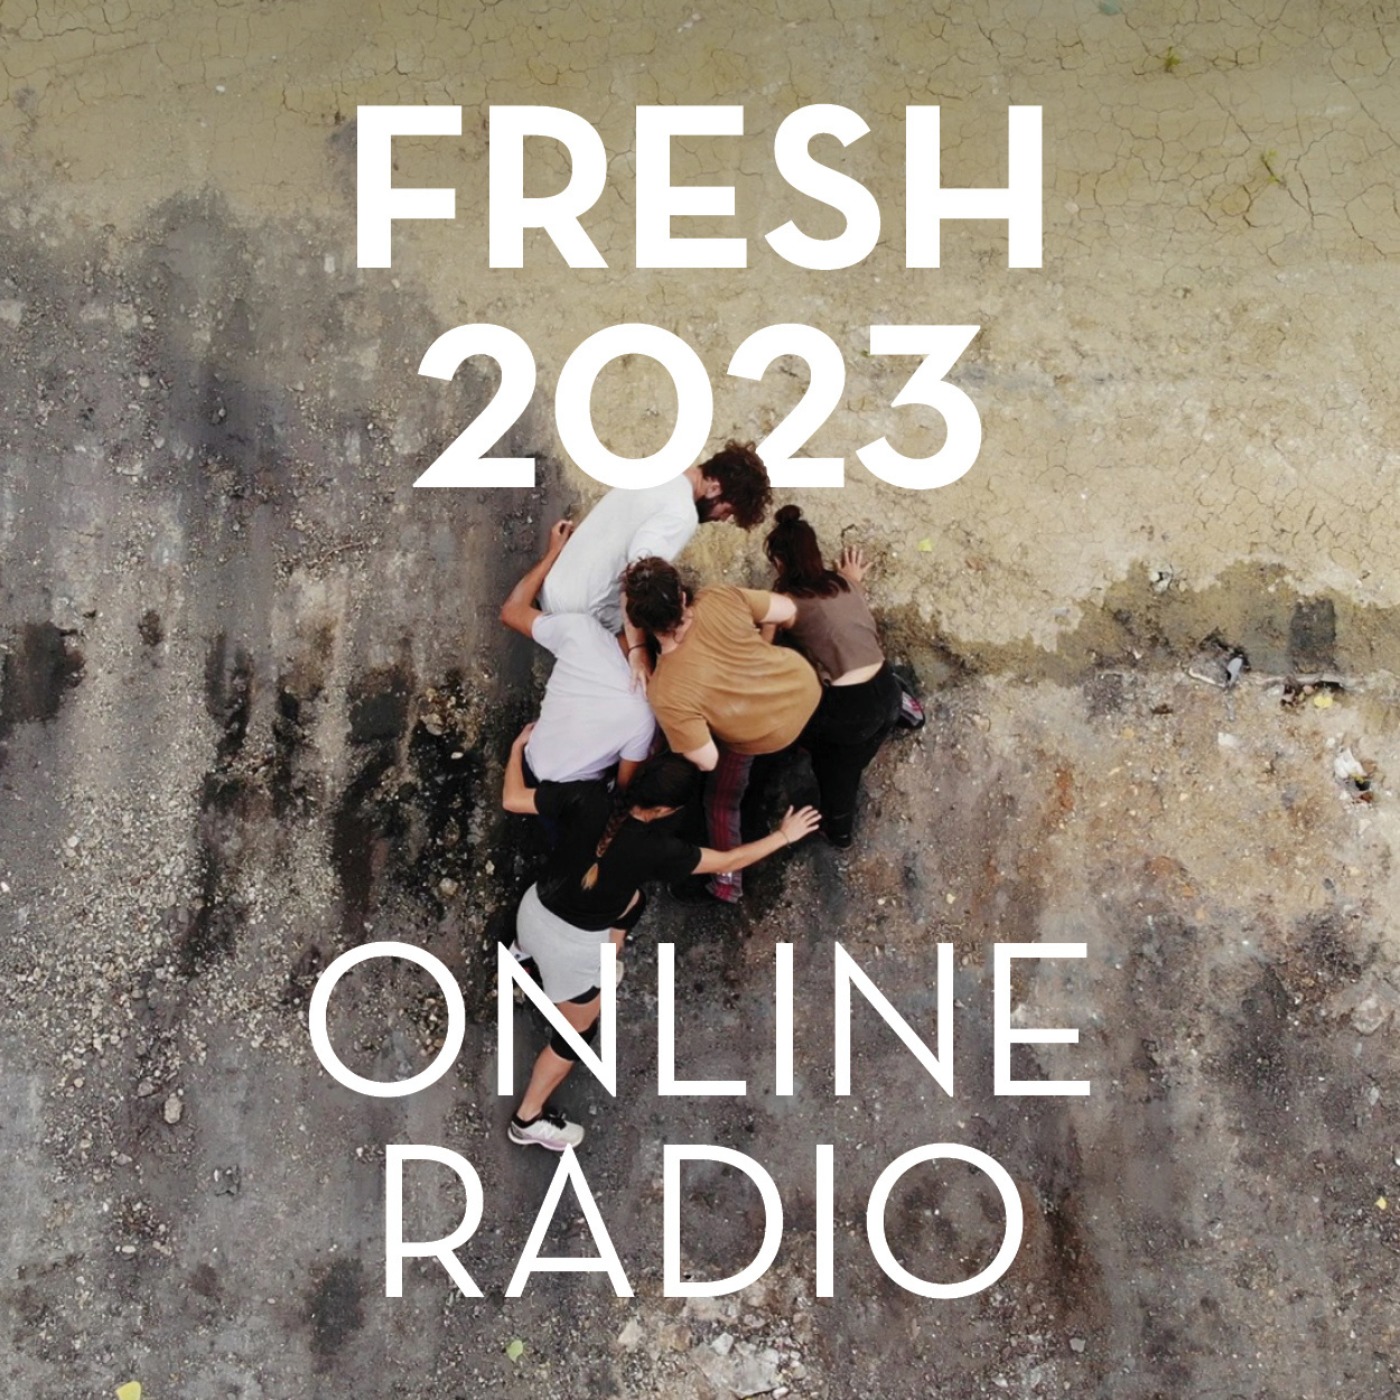 FRESH 2023 - ONLINE RADIO - ON CARE